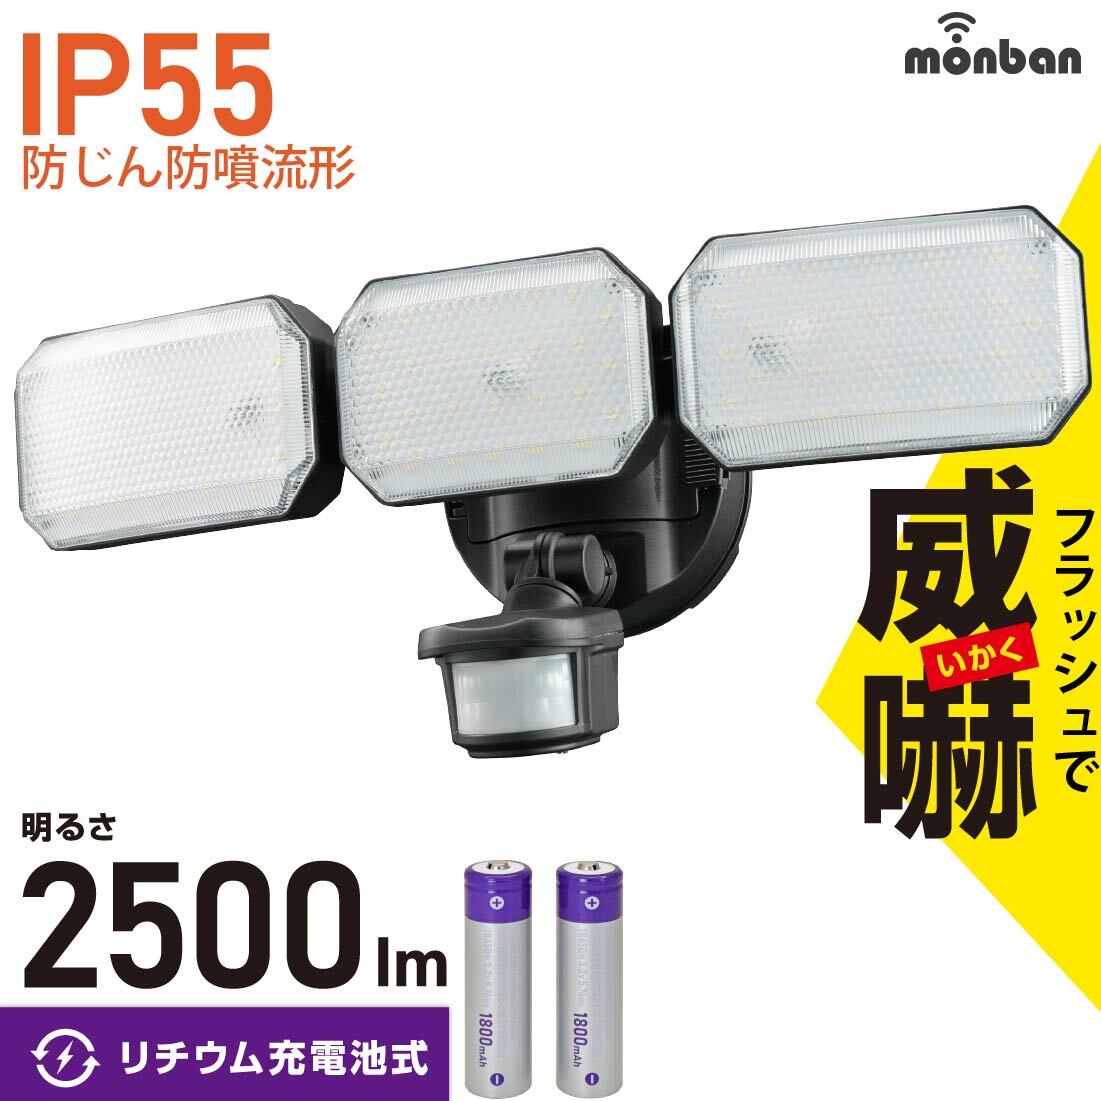 monban crime prevention sensor light 3 light lithium rechargeable battery type 2500 lumen lLS-B313 07-8803 ohm electro- machine 